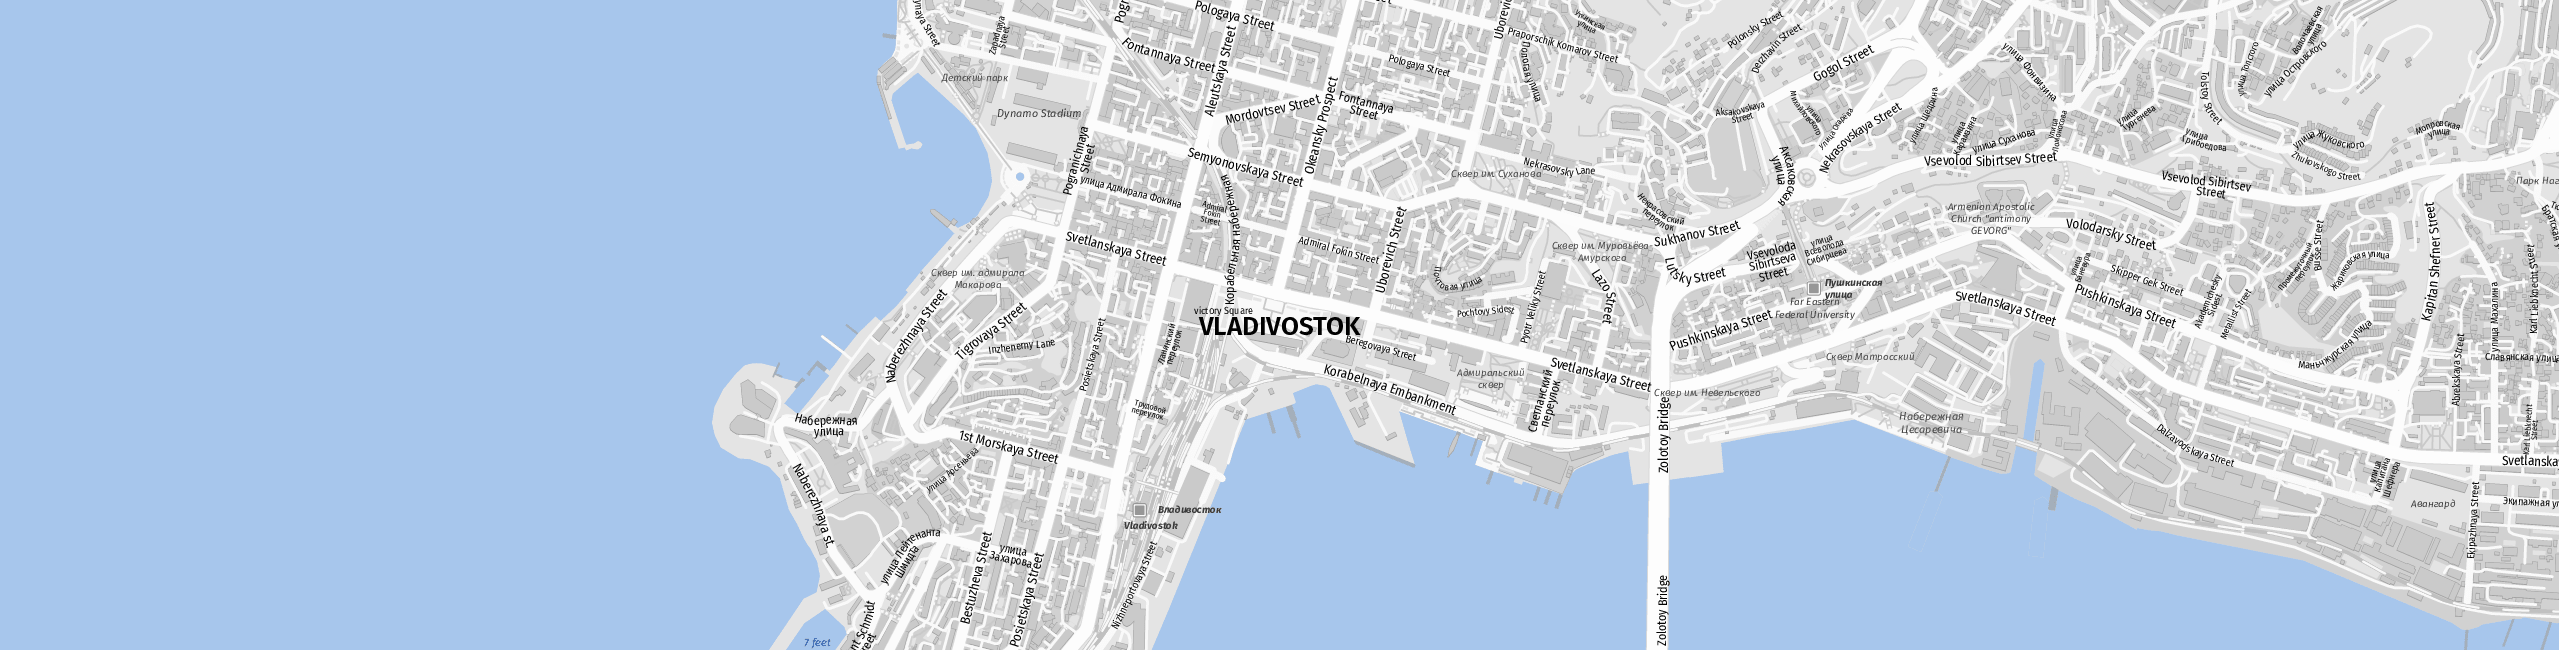 Stadtplan Wladiwostok zum Downloaden.